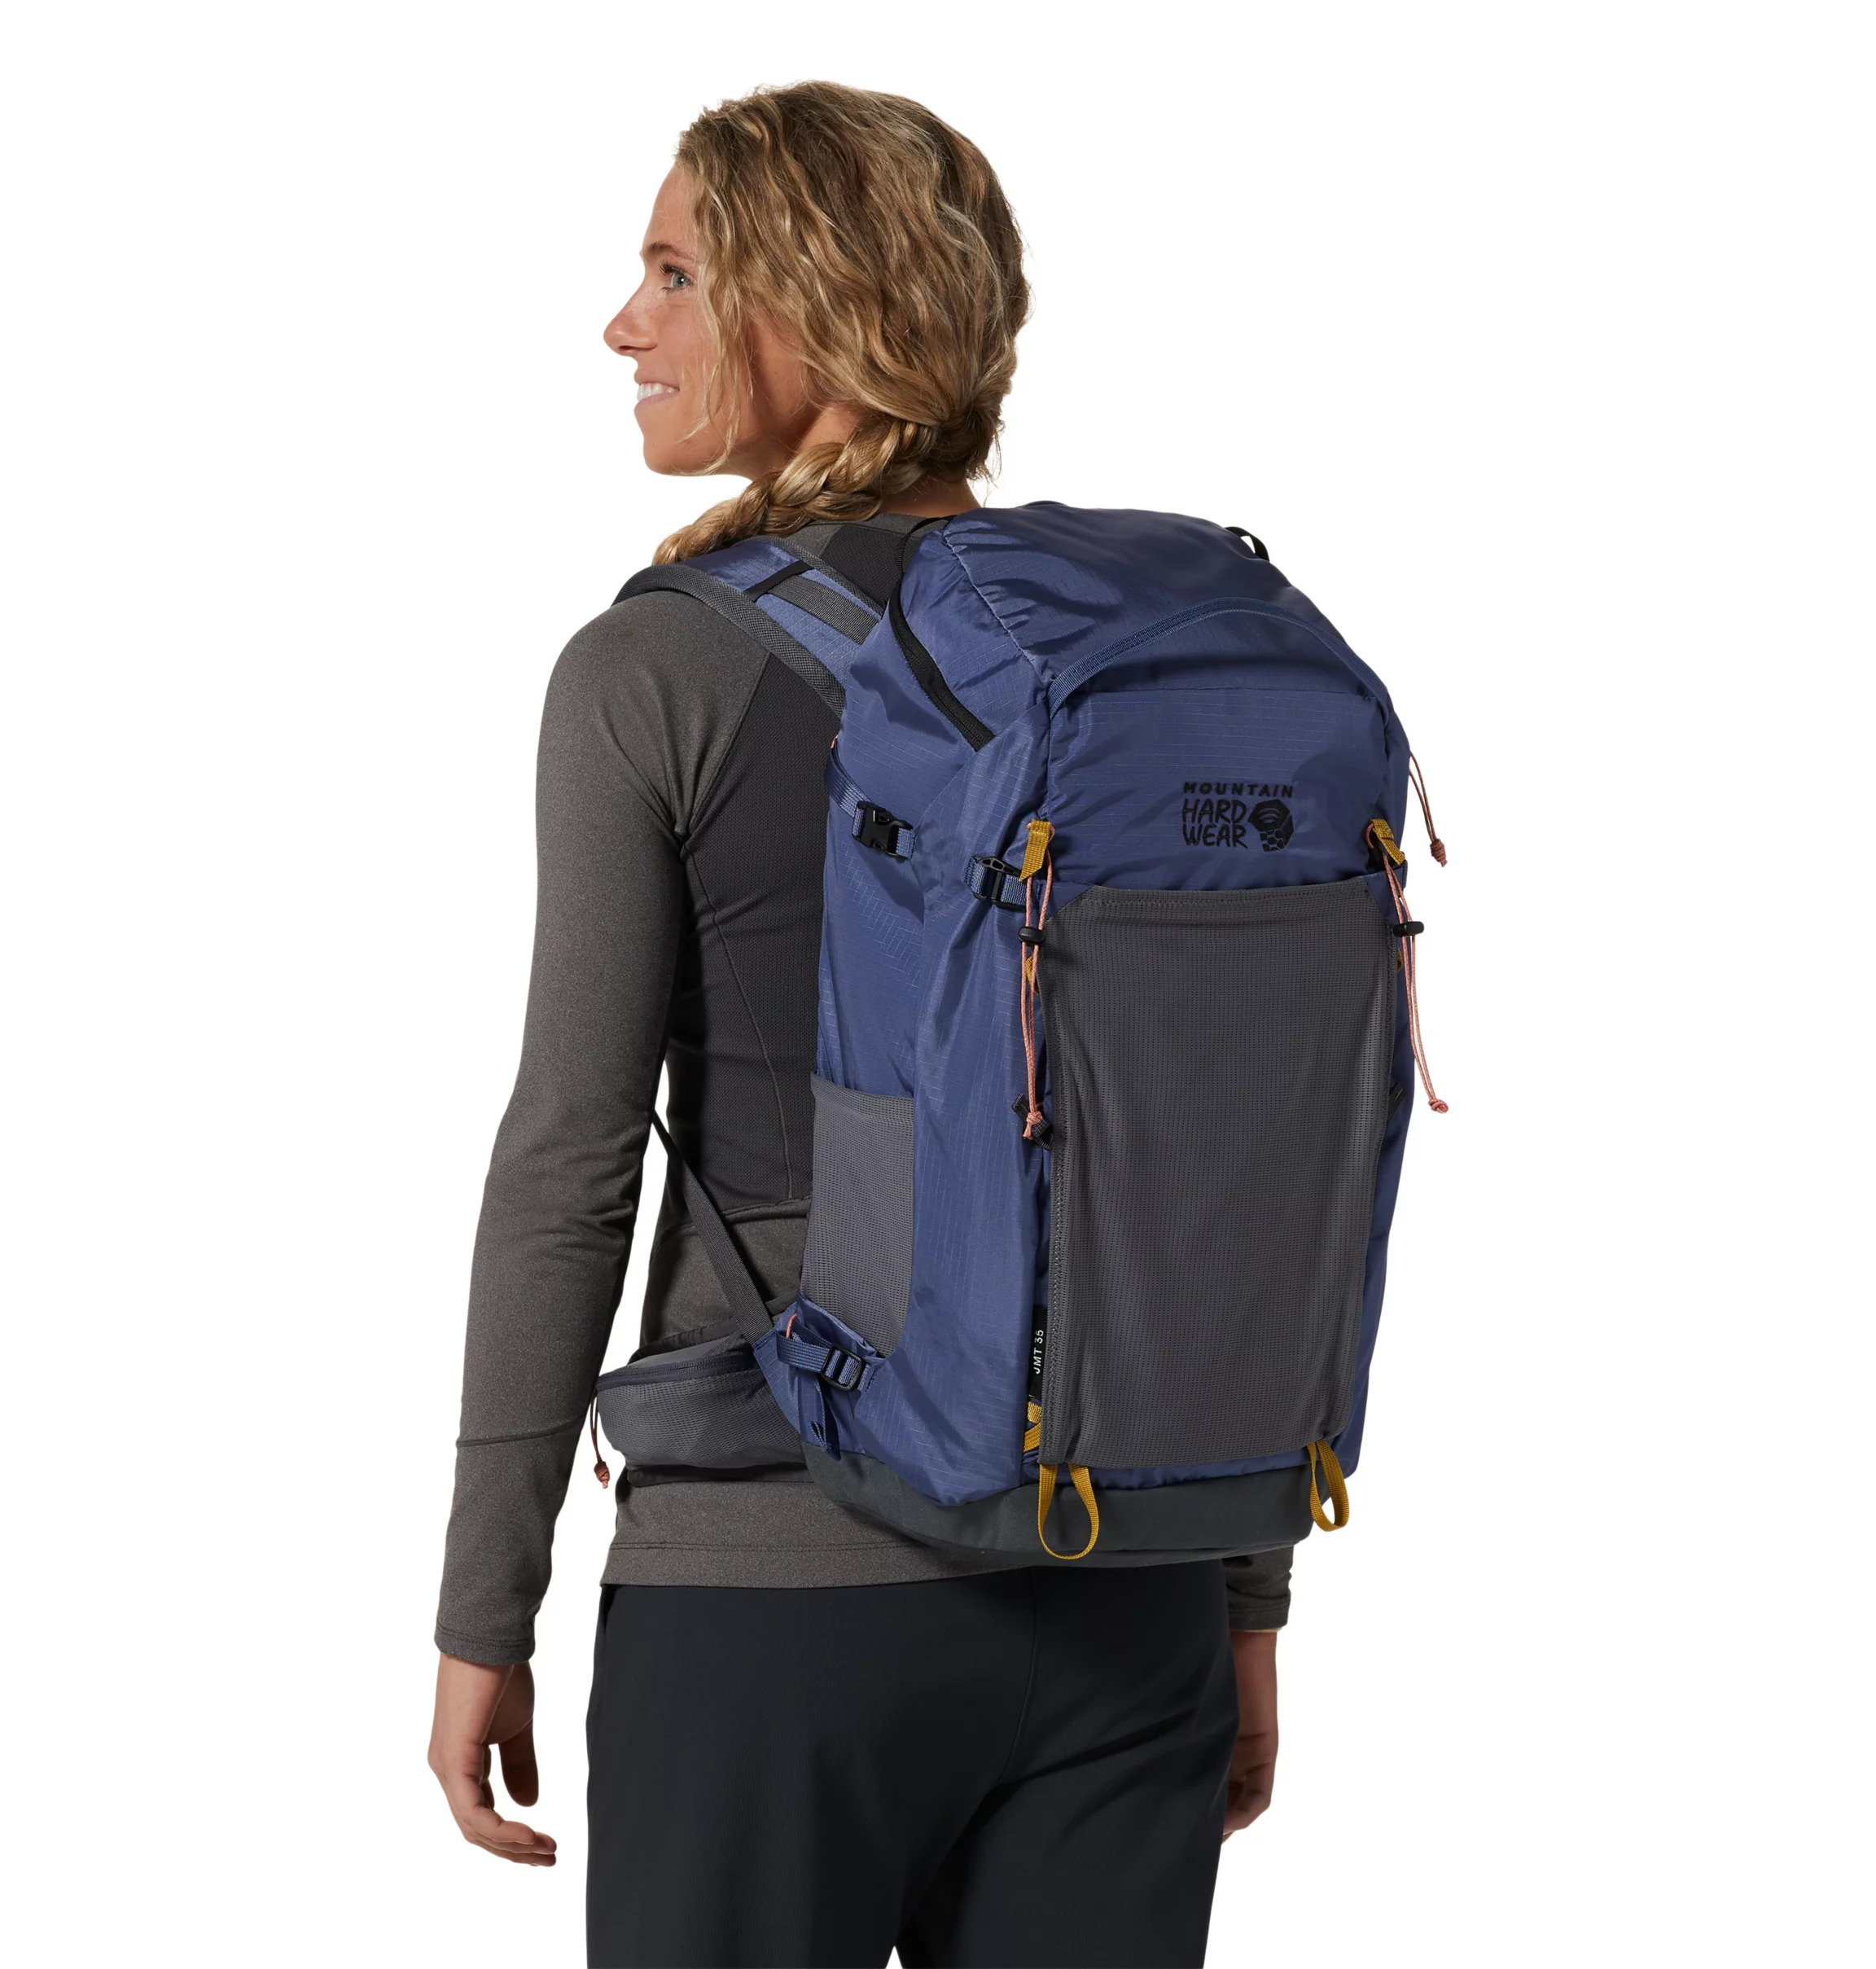 JMT™ W 35L Backpack